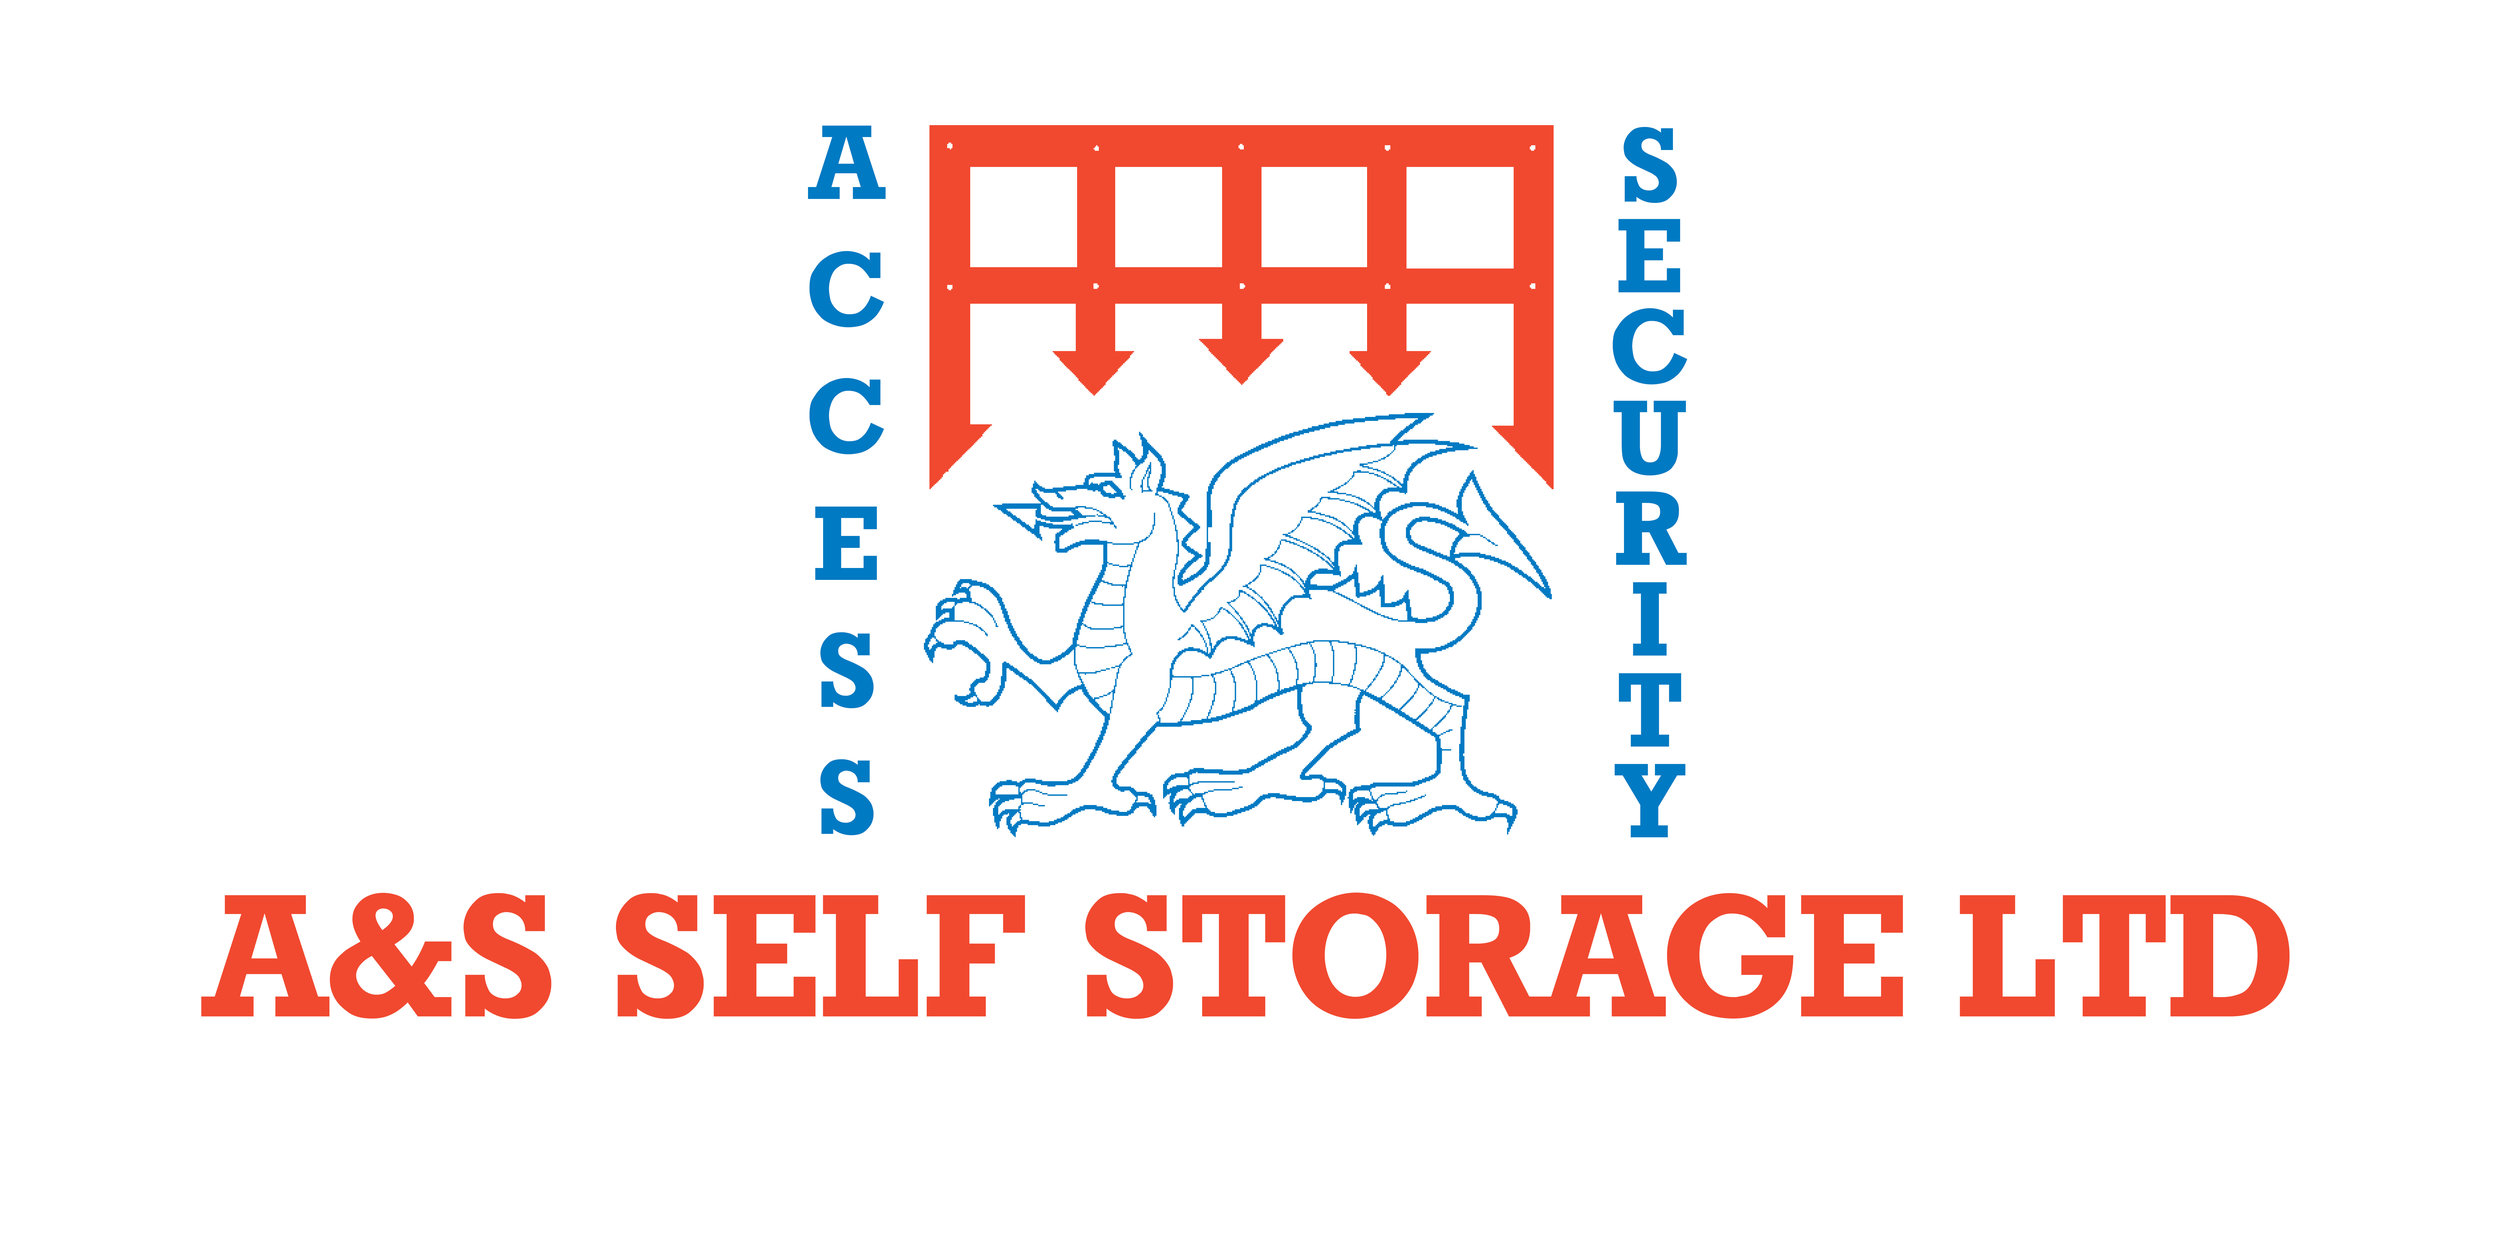 A&amp;S Self Storage Ltd